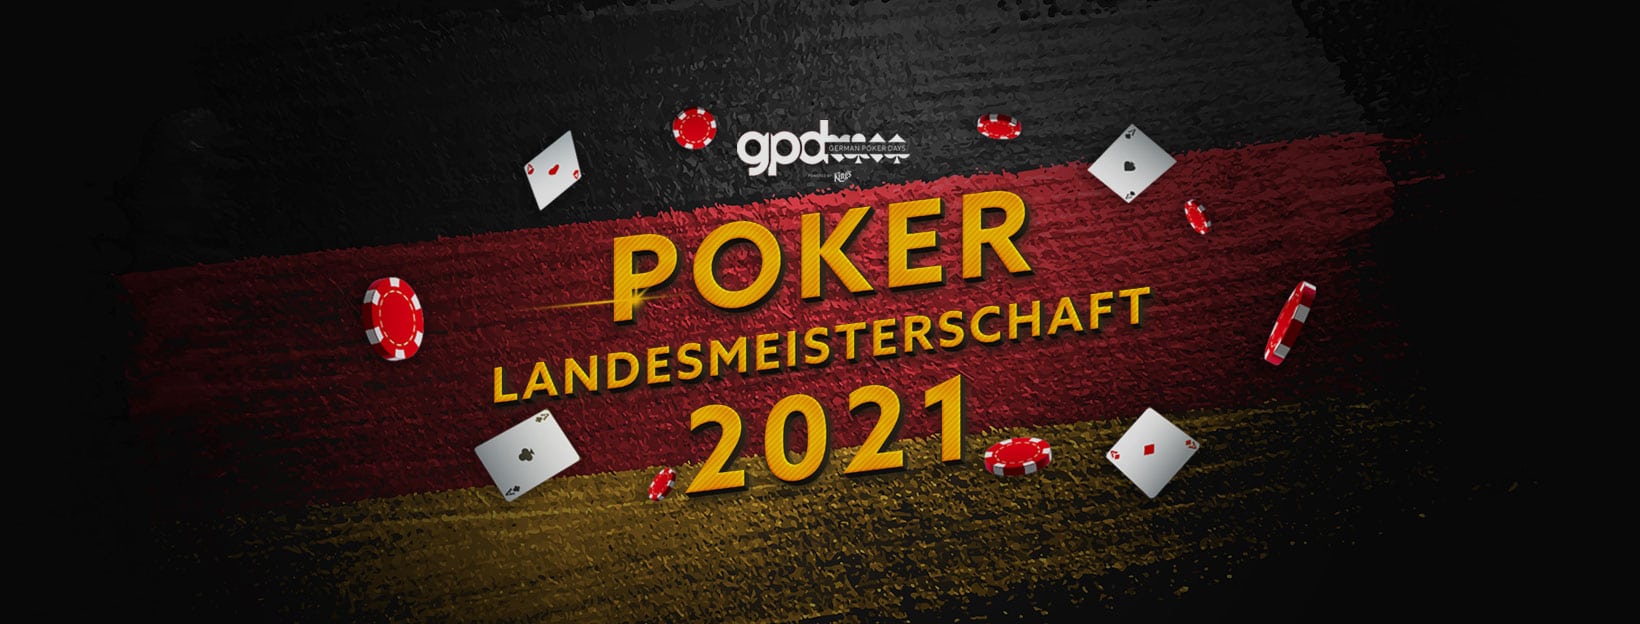 Poker Landesmeisterschaft 2021 Saarland